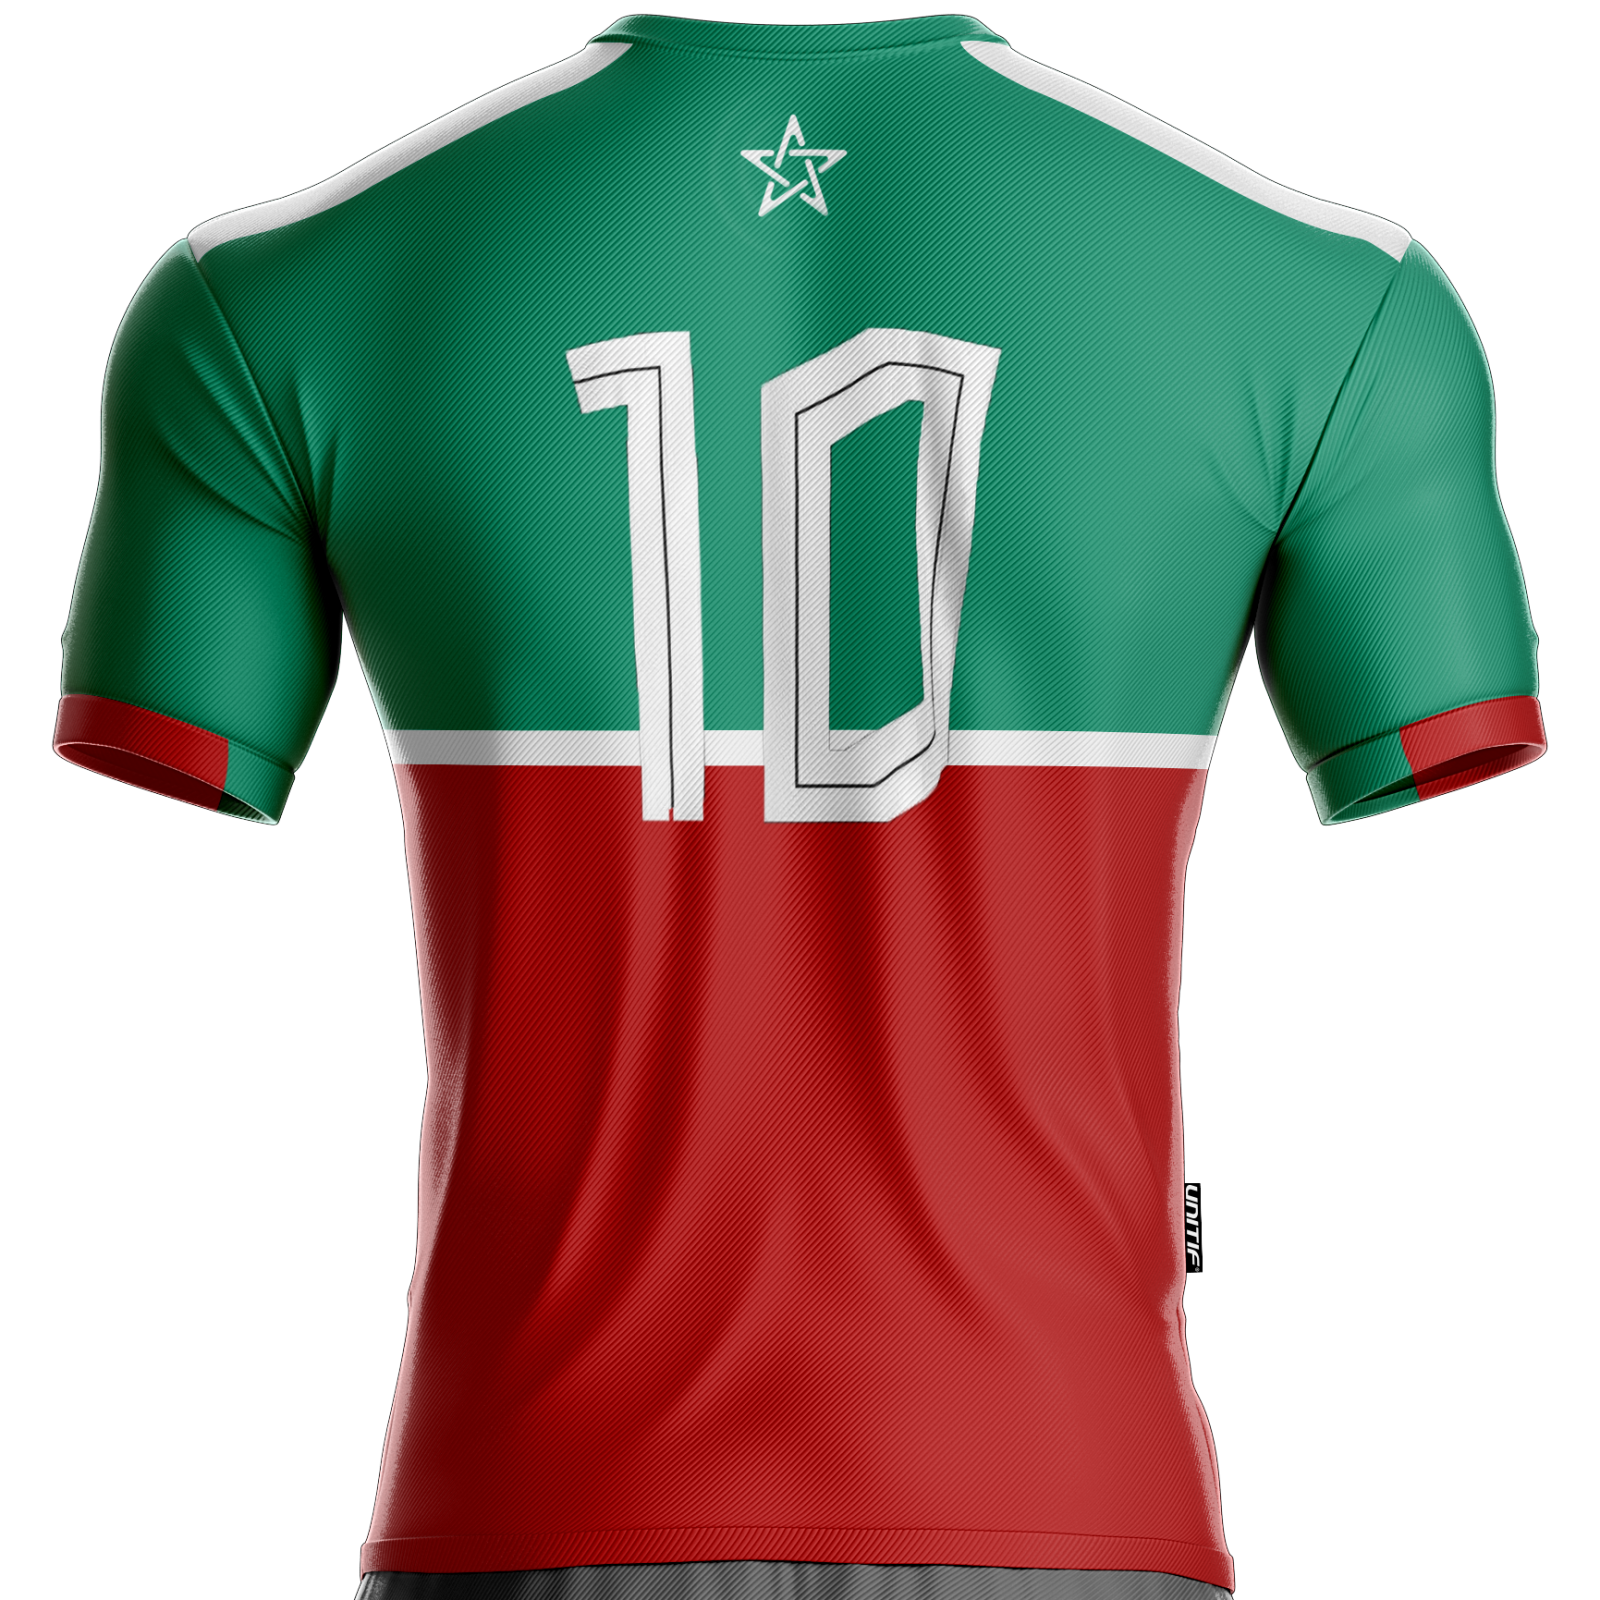 44,90 € - Maillot Maroc football pour supporter modèle PX-665